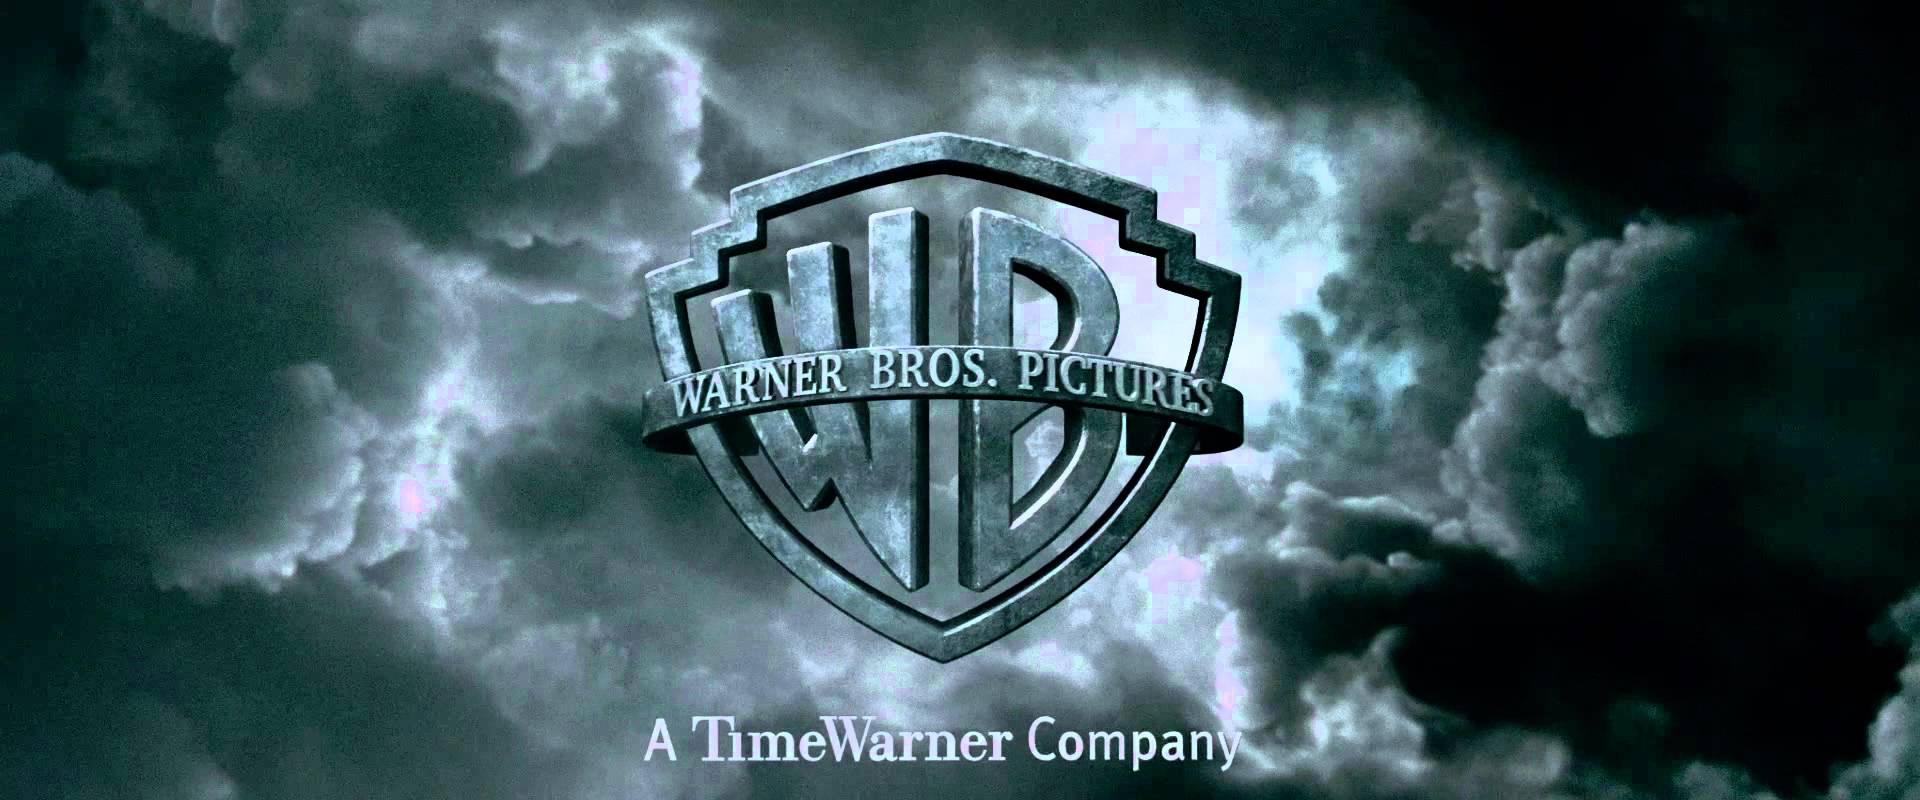 Harry Potter Opening Logo - Harry potter warner bros Logos